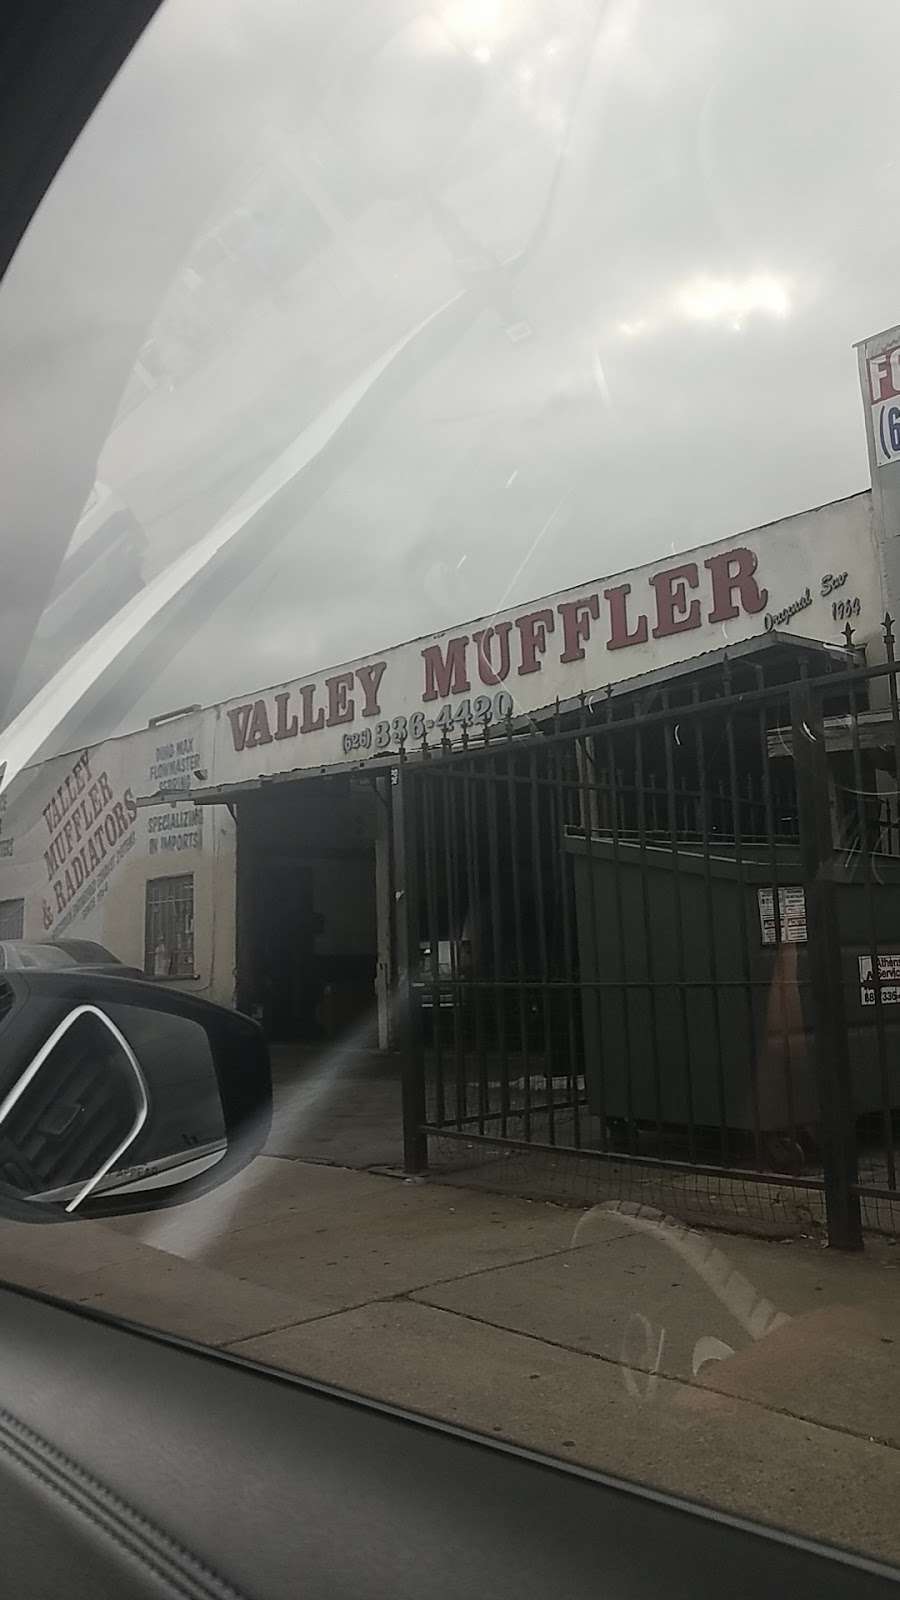 Valley Muffler & Radiator | 13602 East Valley Bi, La Puente, CA 91746 | Phone: (626) 336-4420